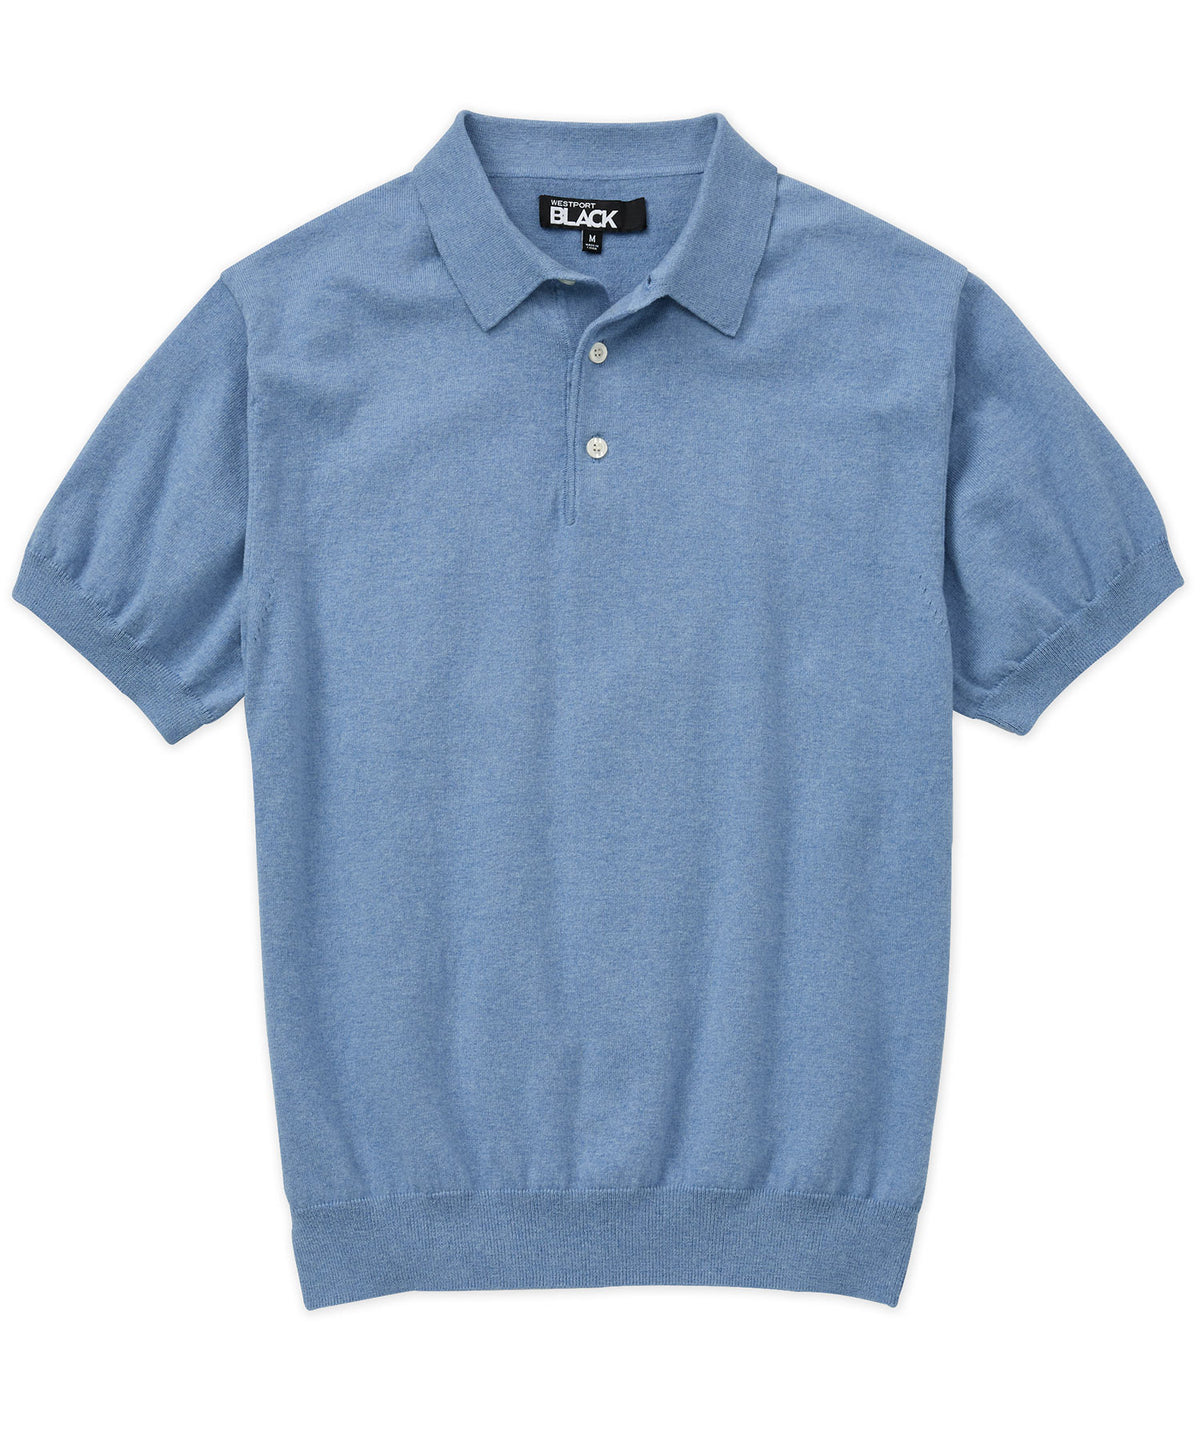 Westport Black Short Sleeve Cotton Cashmere Polo Knit Shirt, Big & Tall